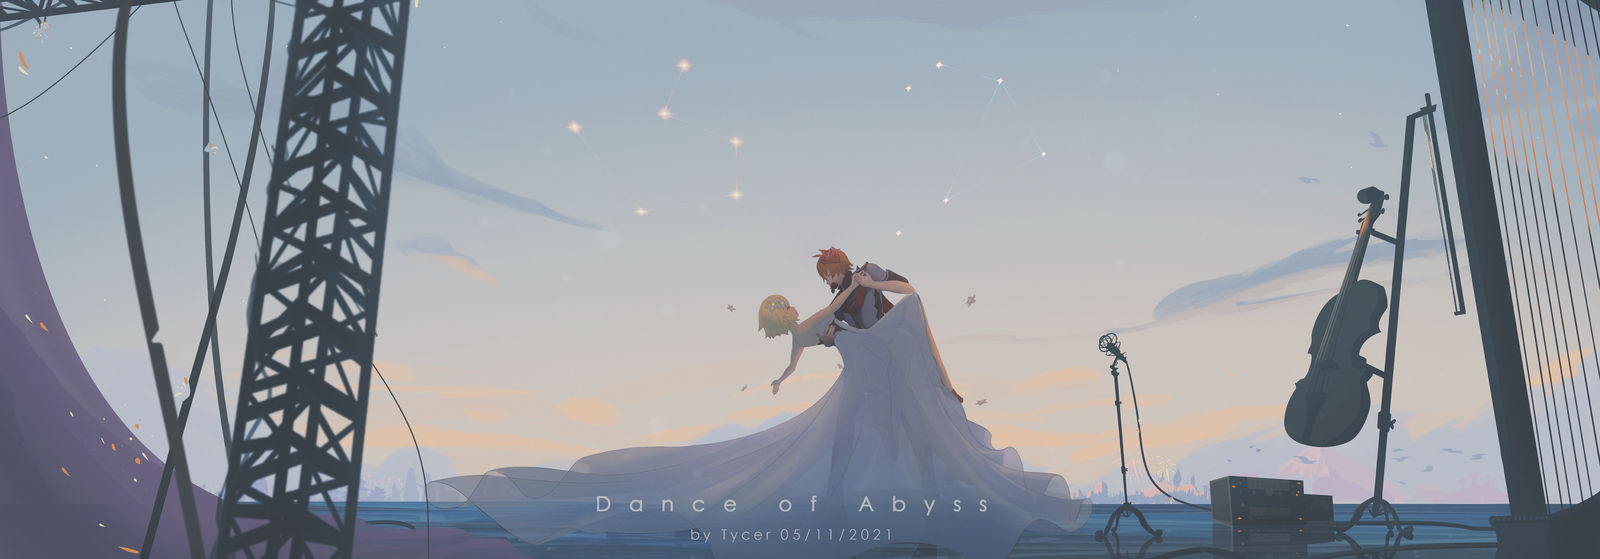 Dance of Abyss插画图片壁纸